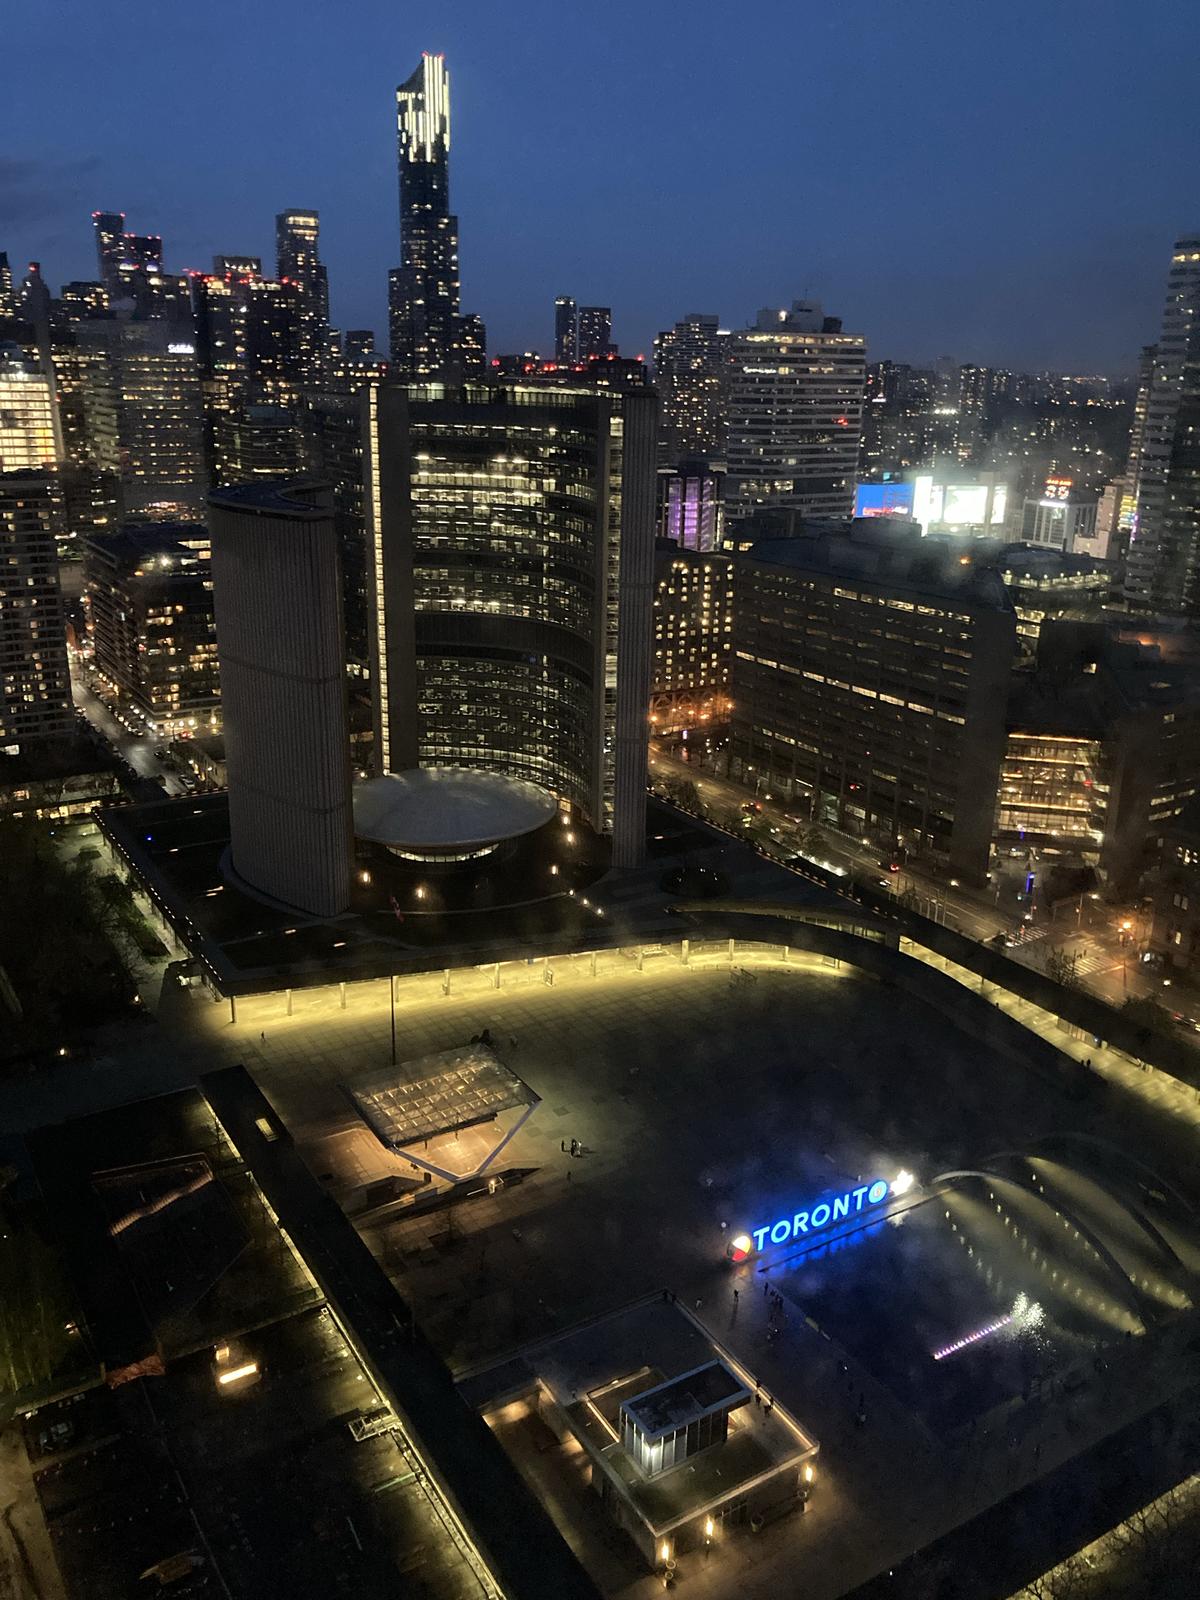 Toronto skyline at night with buildings illuminated